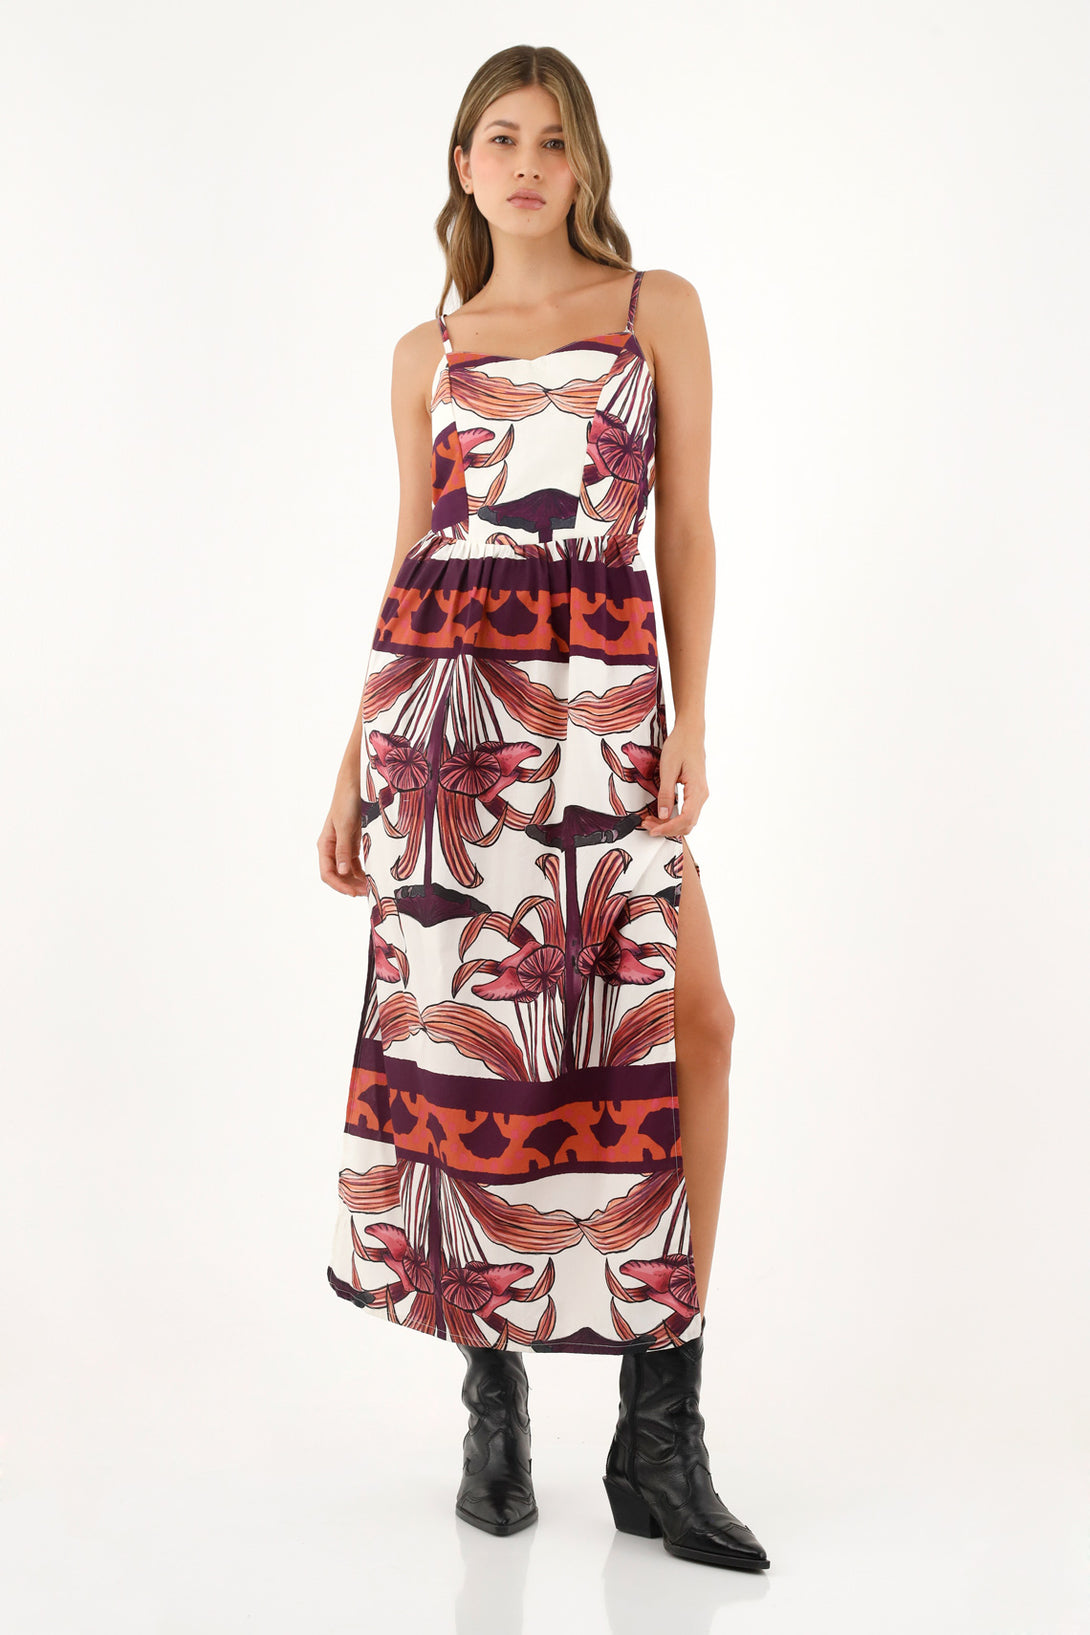 Tns dress for women, long dresses printed with mushroom borders